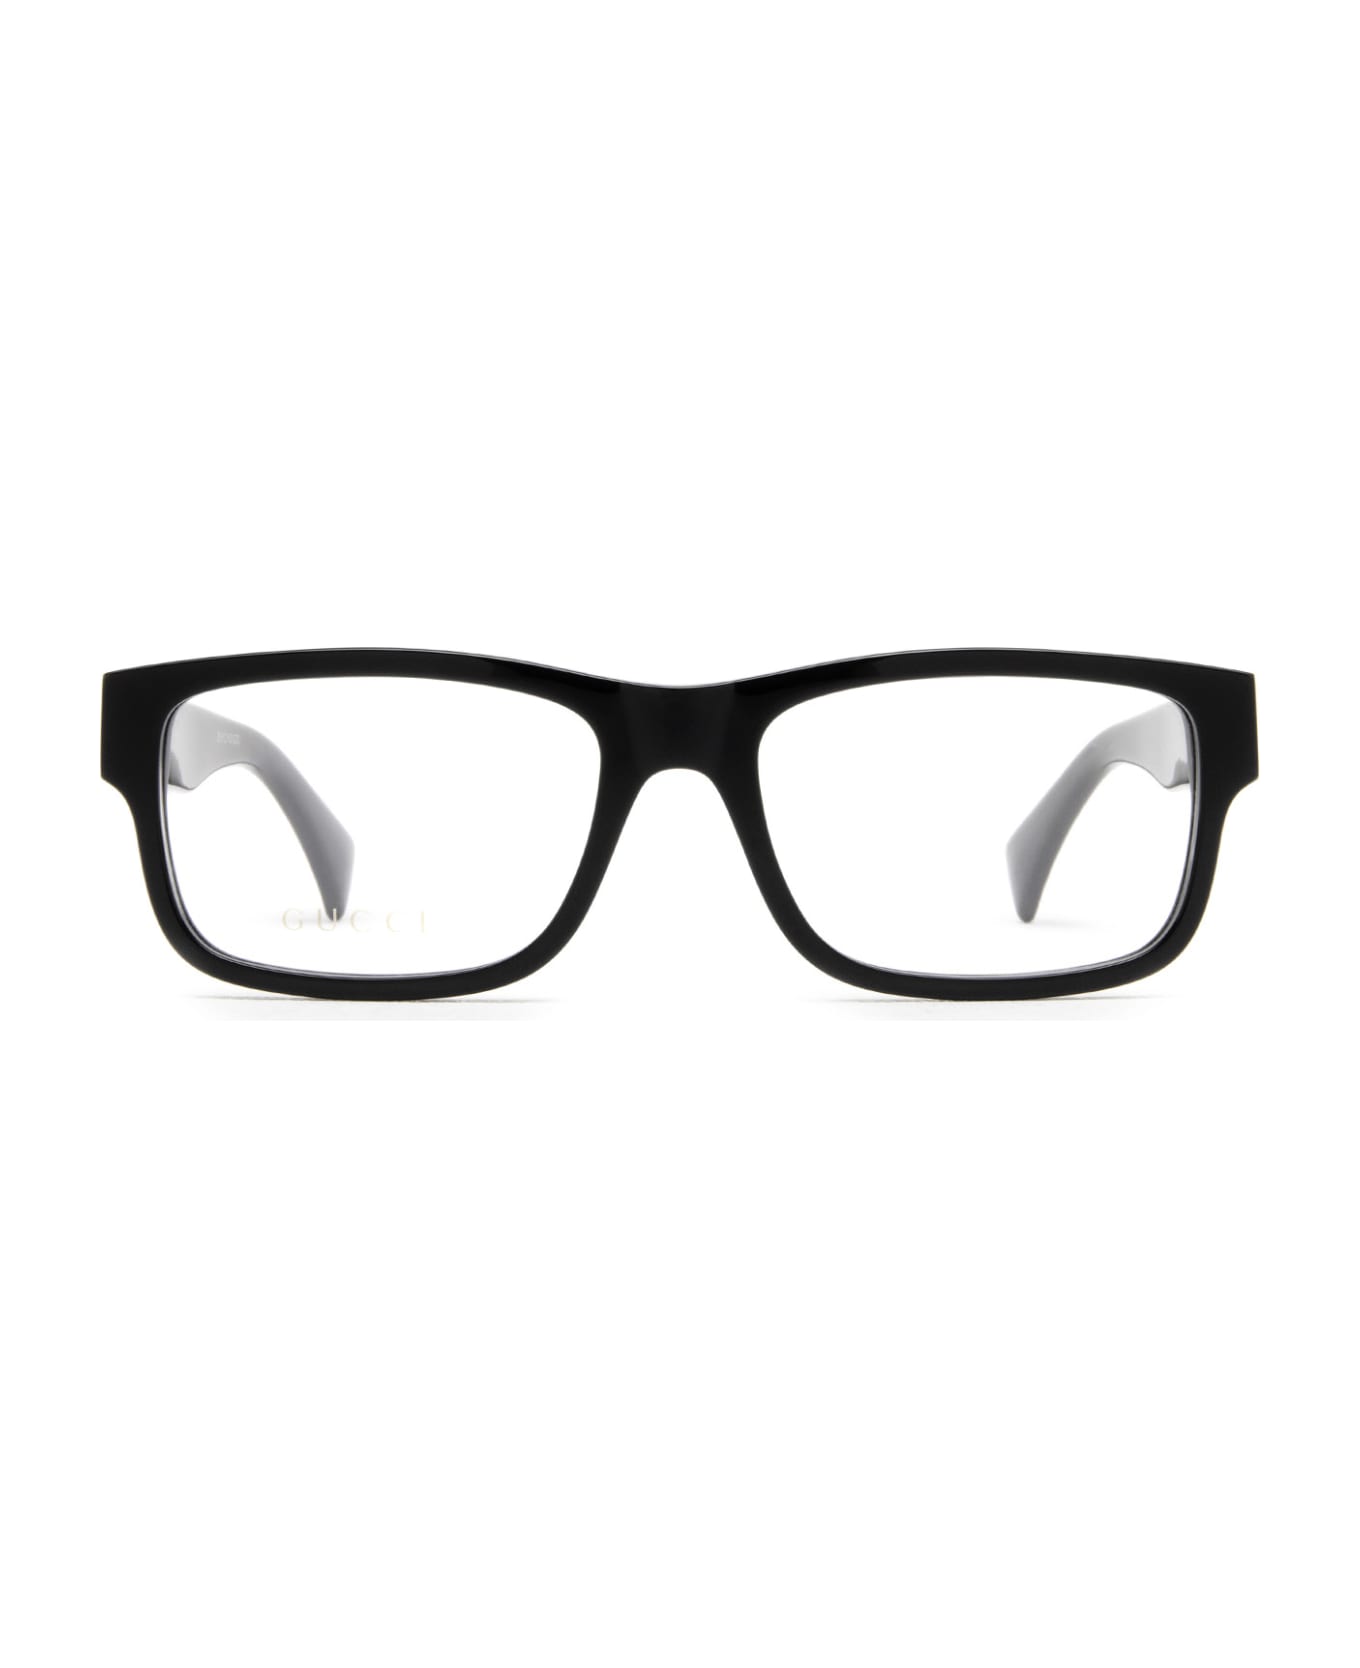 Gucci Eyewear Gg1141o Black Glasses - Black アイウェア